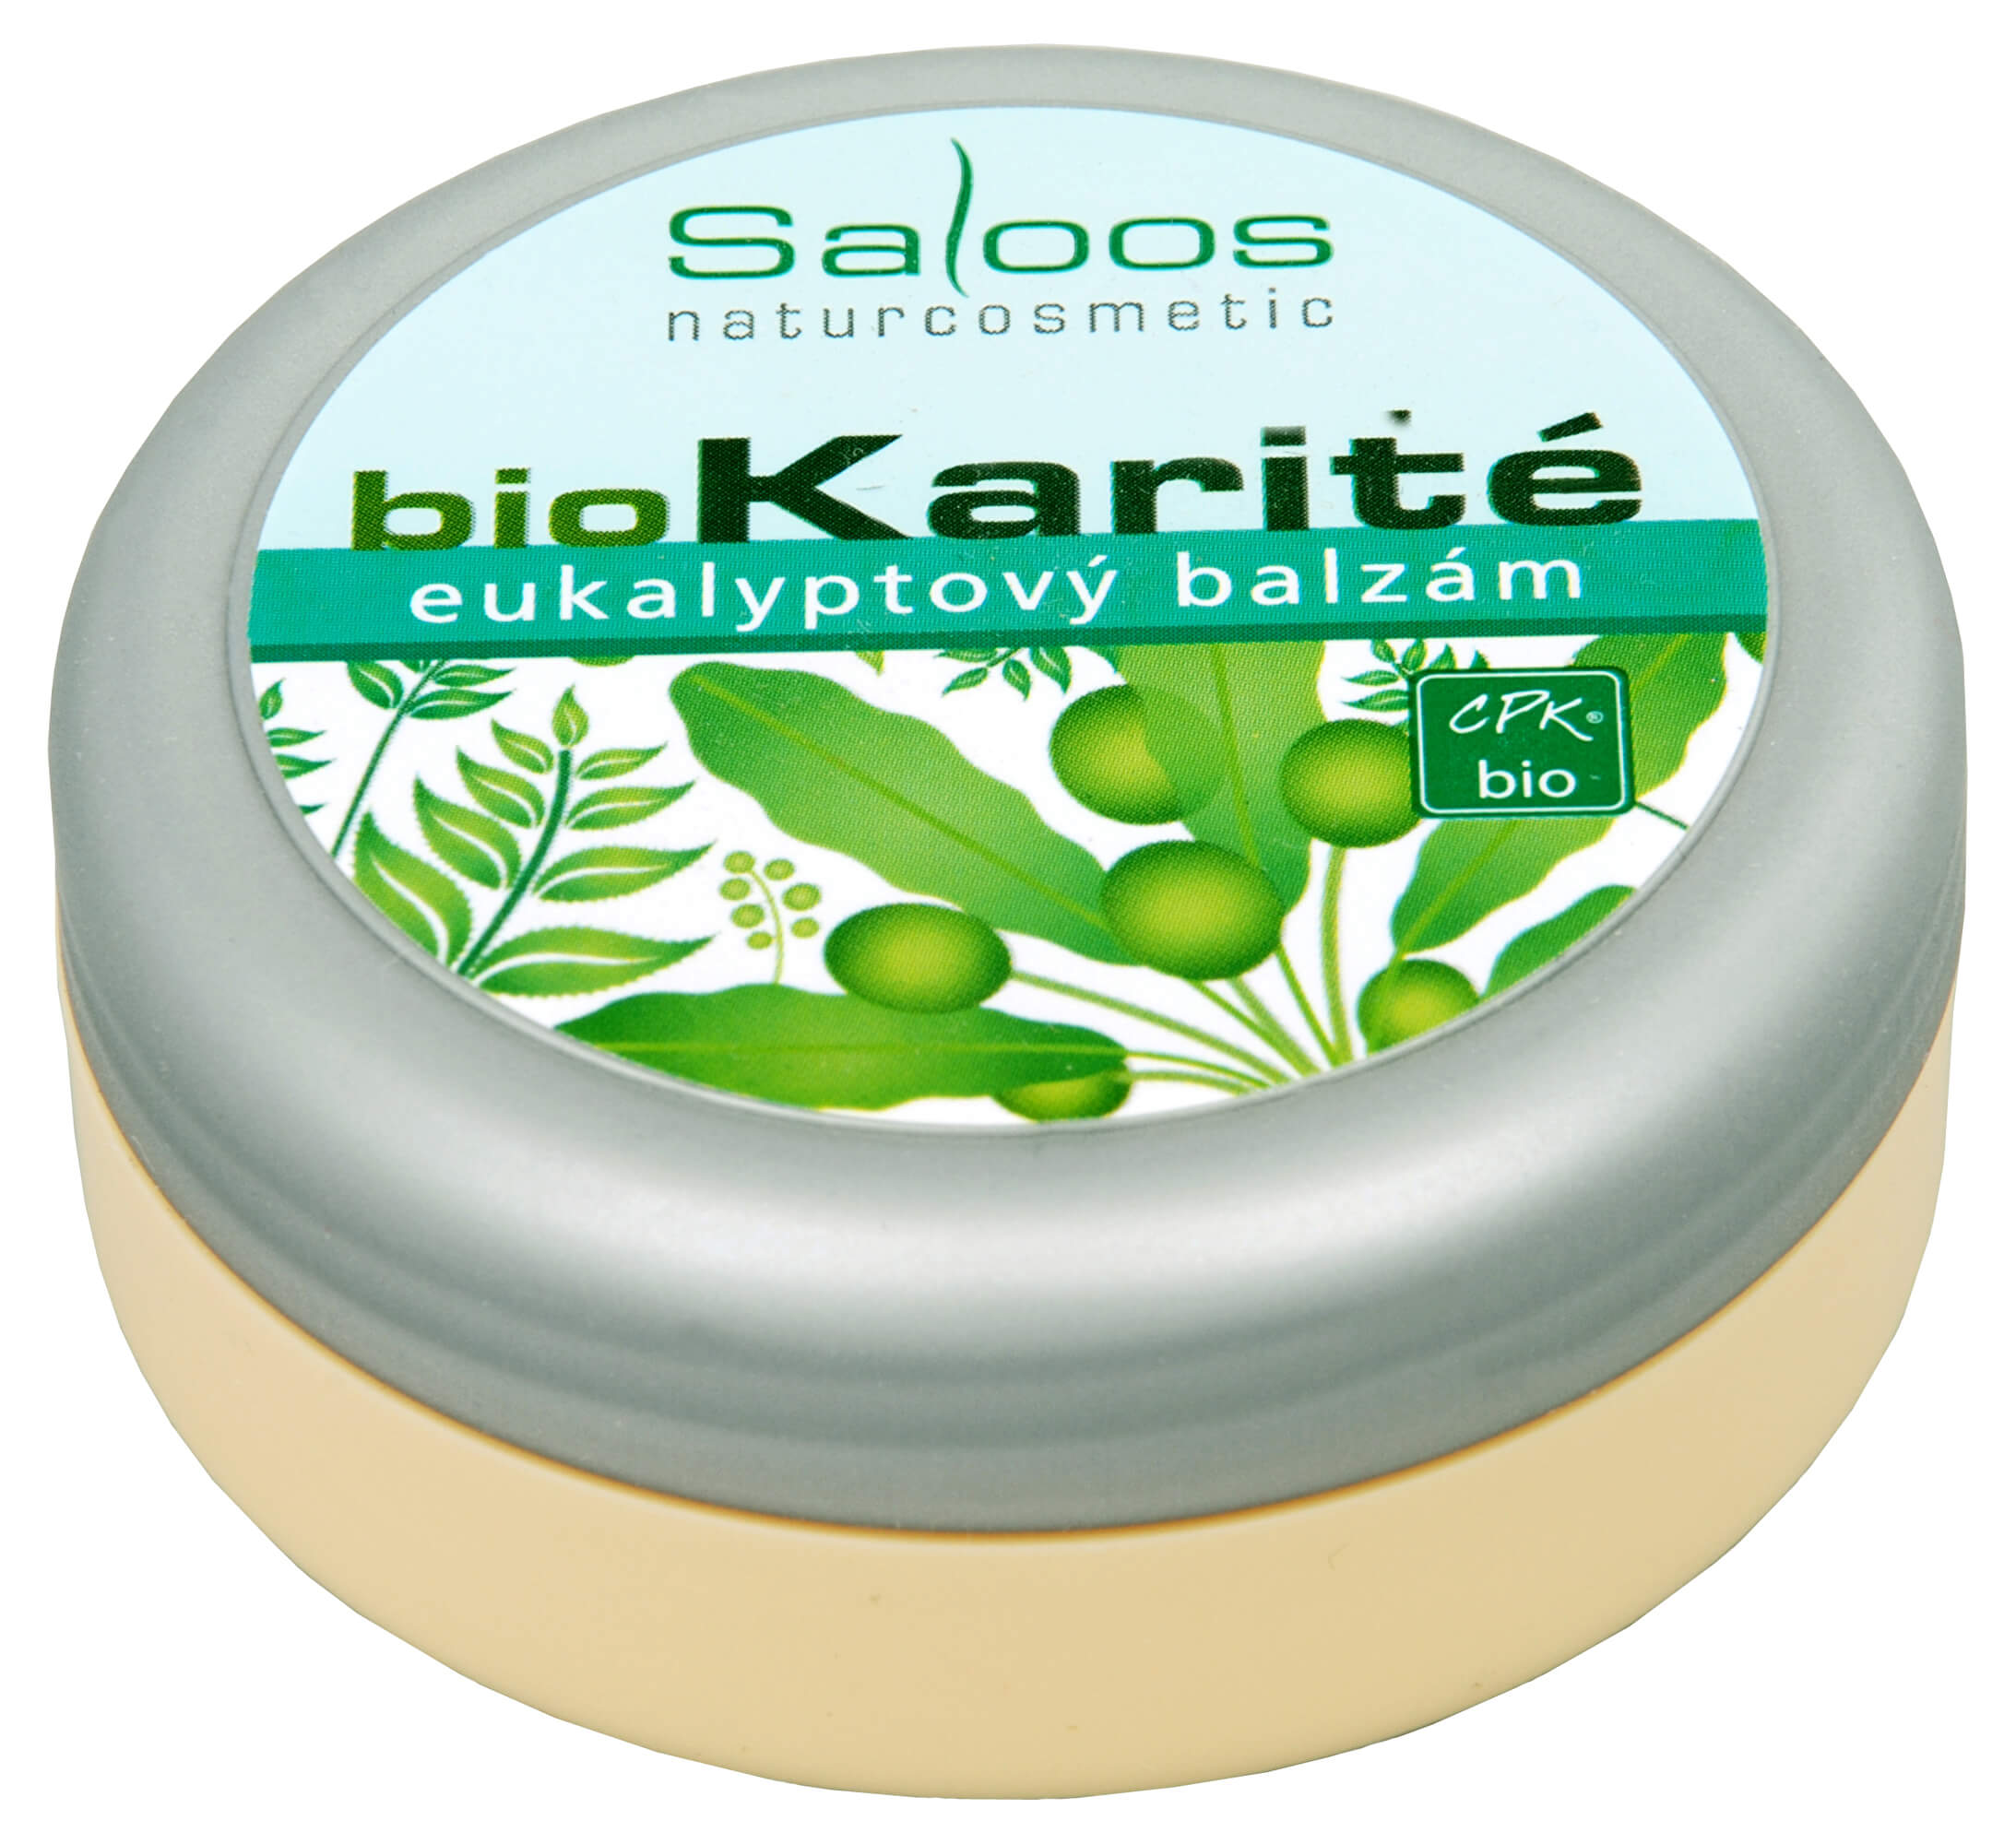 Zobrazit detail výrobku Saloos Bio Karité balzám - Eukalyptový 50 ml